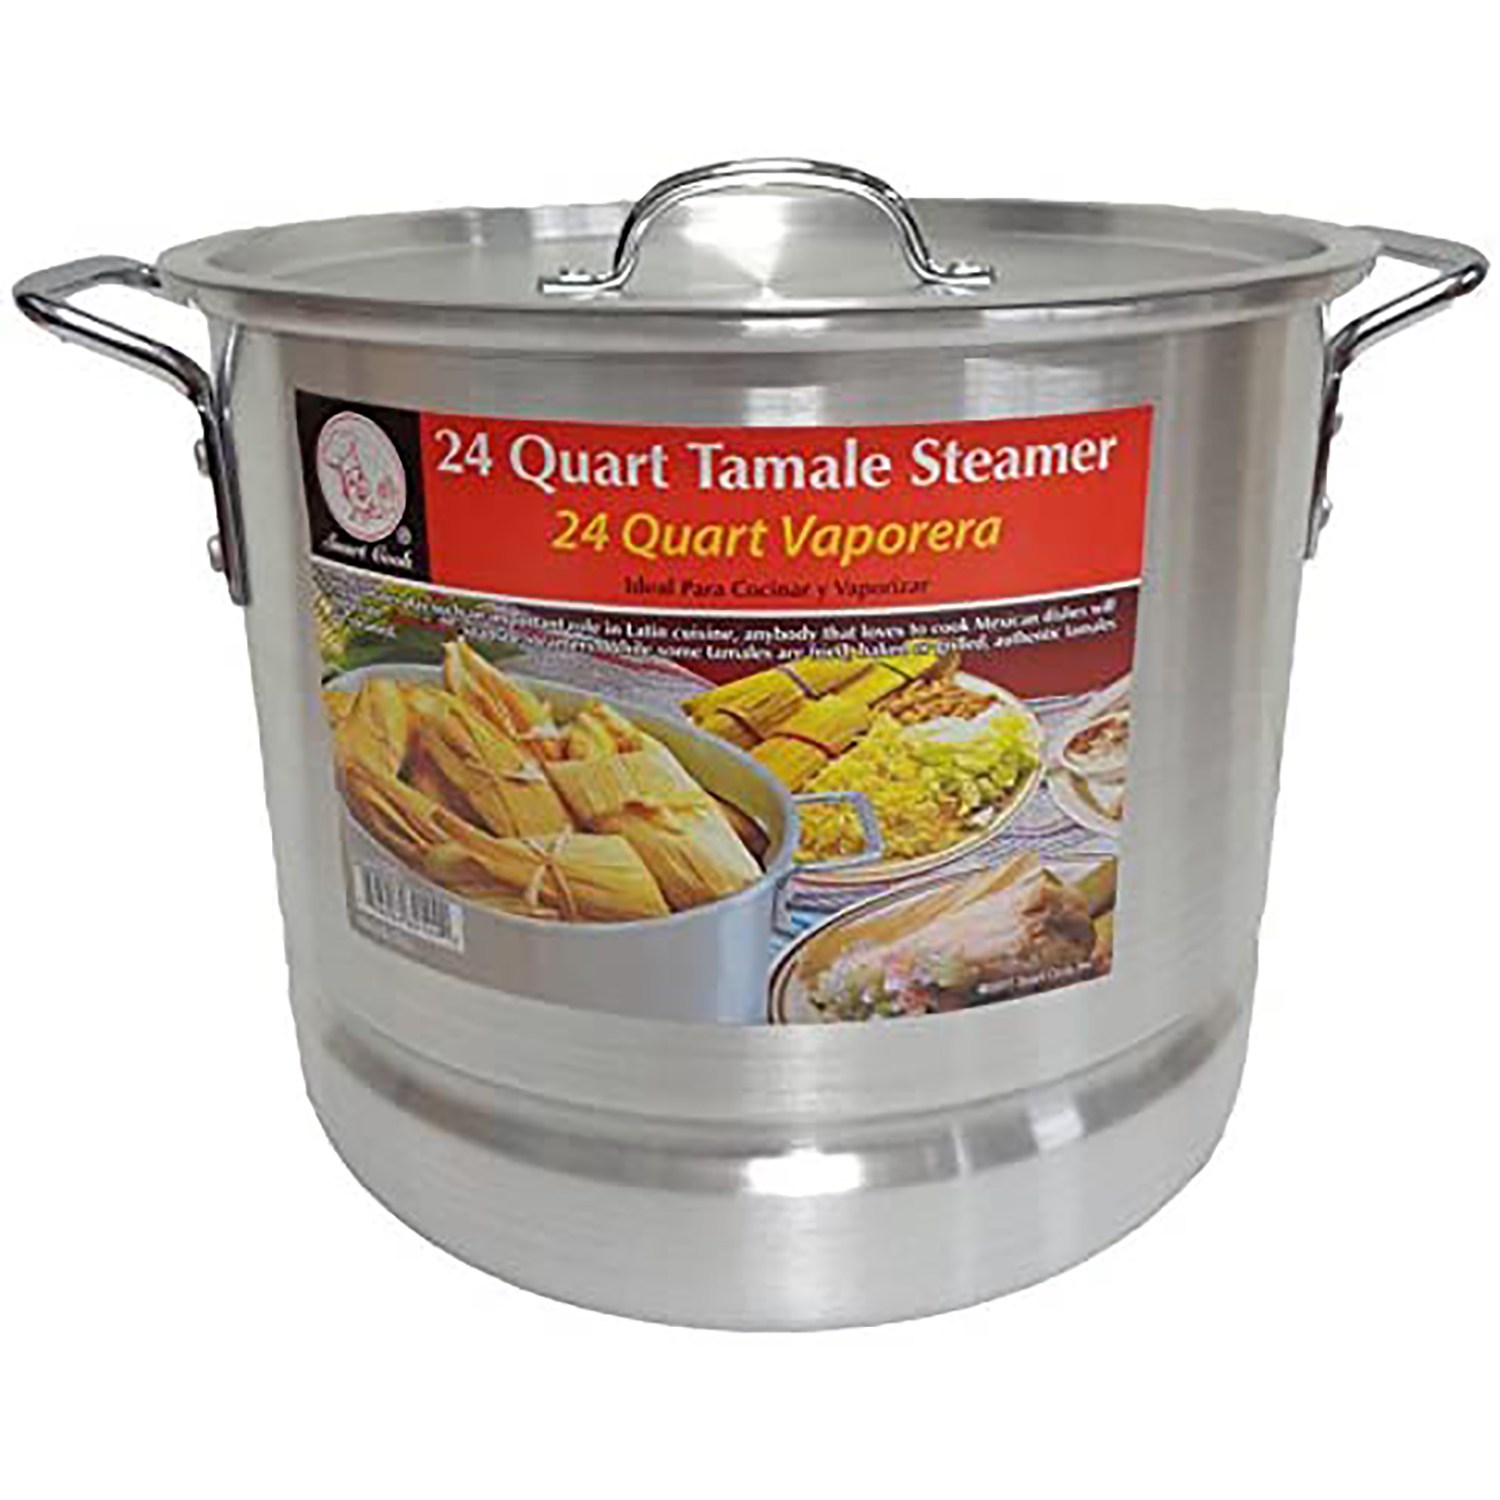 Aluminum Tamale/Steamer Set - 52 quart + 20 quart with steamer insert and  lids.